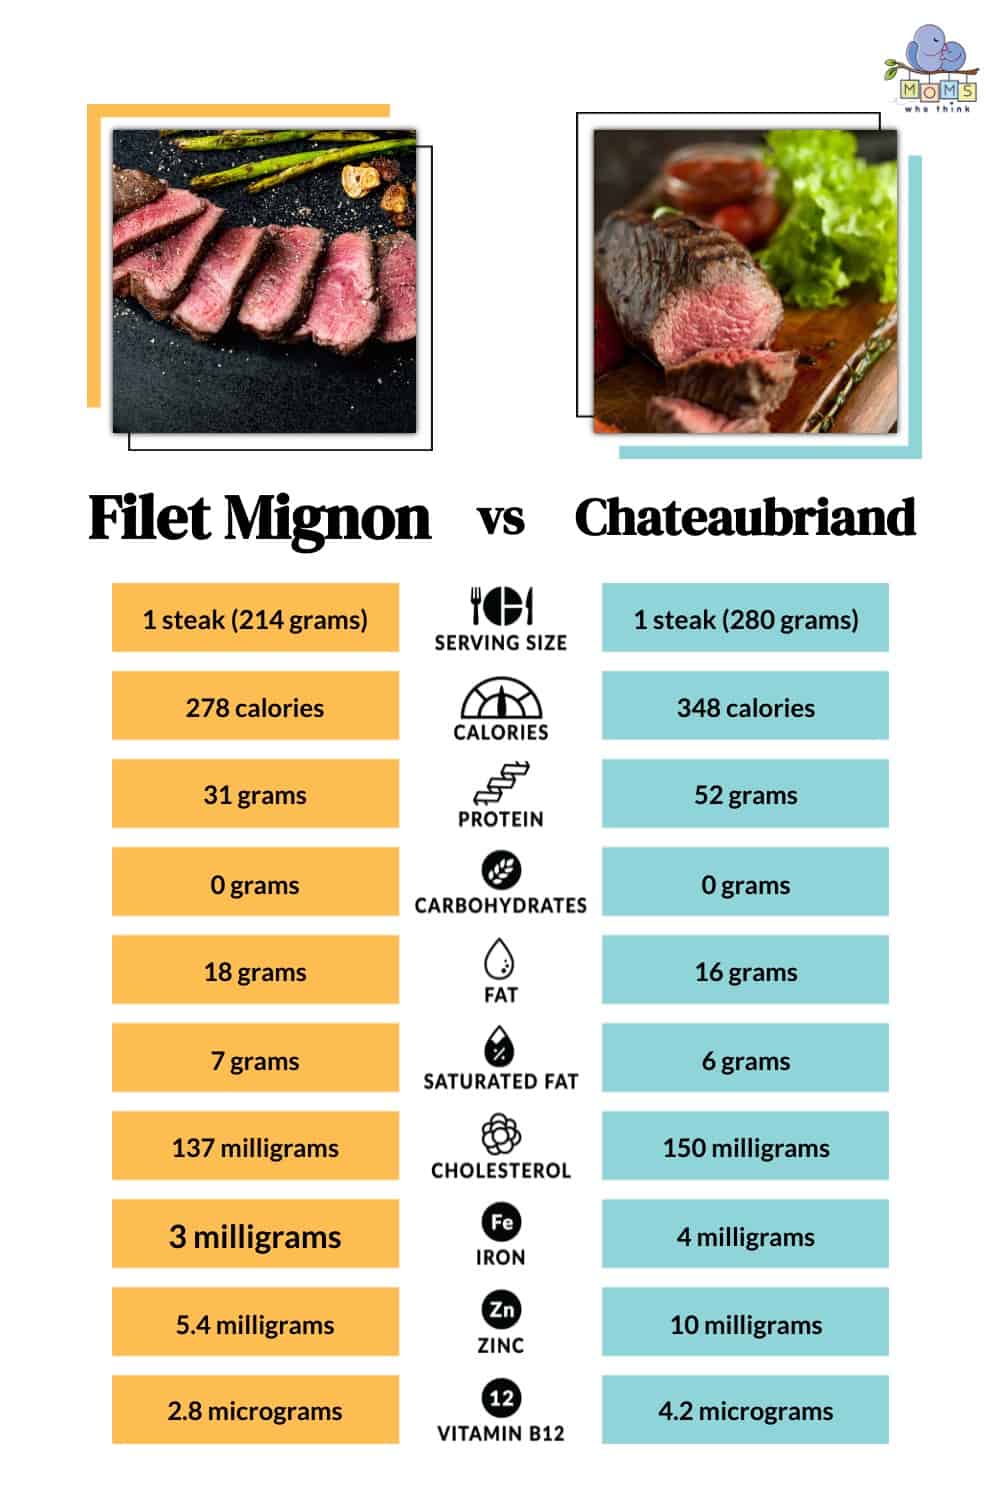 Filet Mignon vs Chateaubriand: Which is Healthier